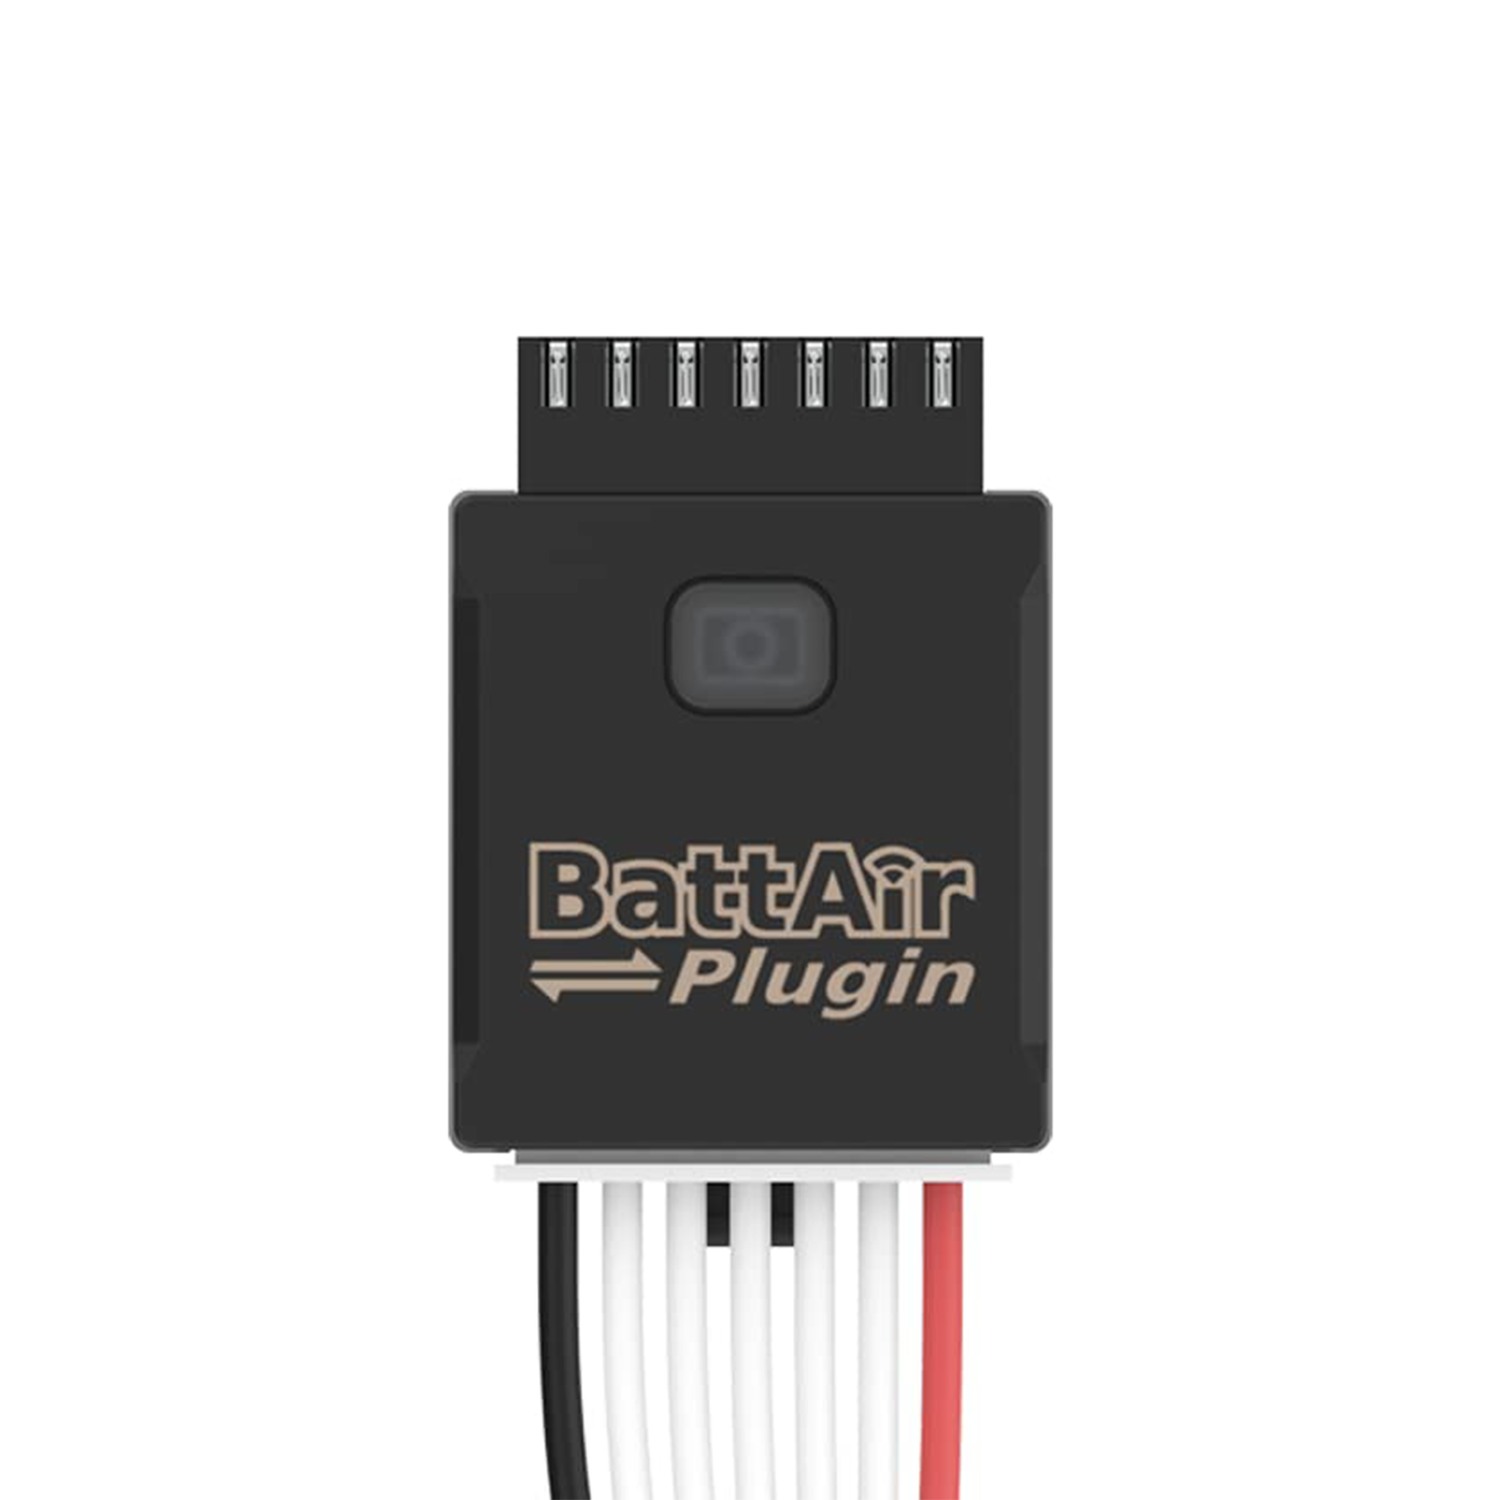 Battair-Plugin, 5 Packs 2/3-4S/5-6S RC-Modellzubehör für Batterie Guard Housekeeper Smart Battery Management System